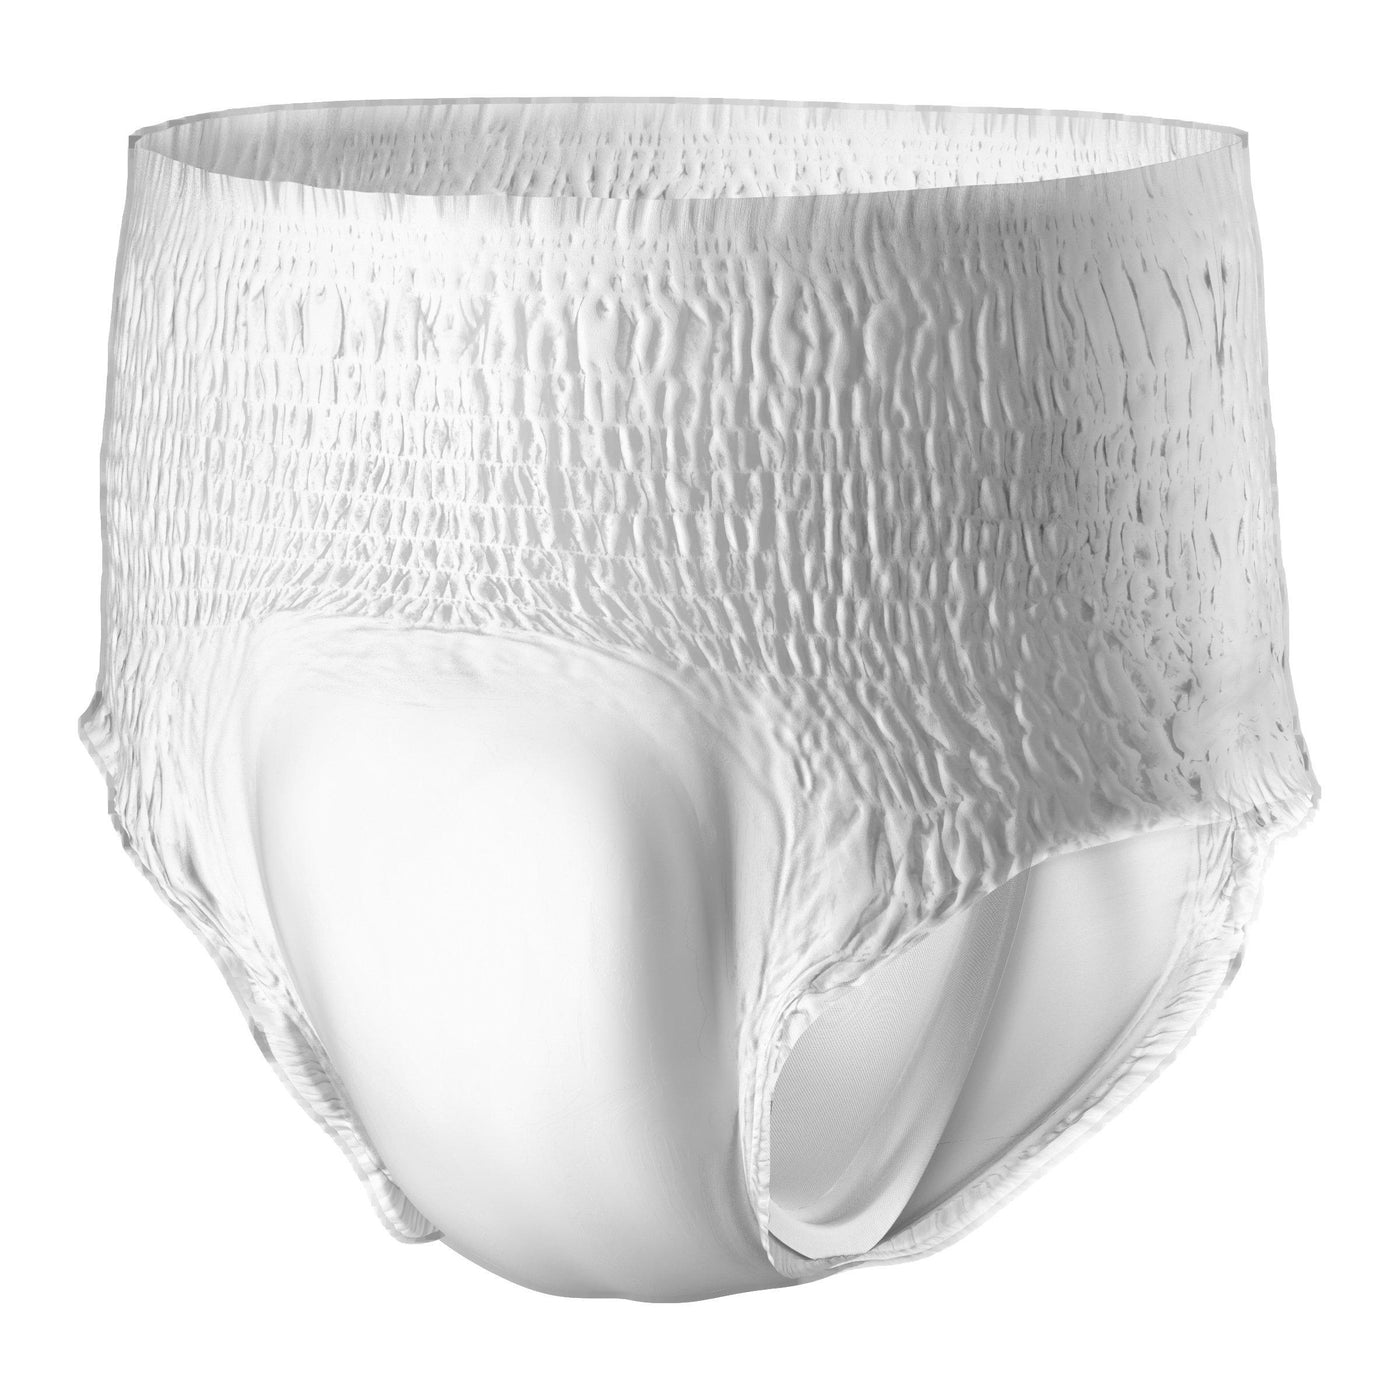 Prevail Underwear For Men - Maximum Absorbency, S/M, L/XL, 2XL